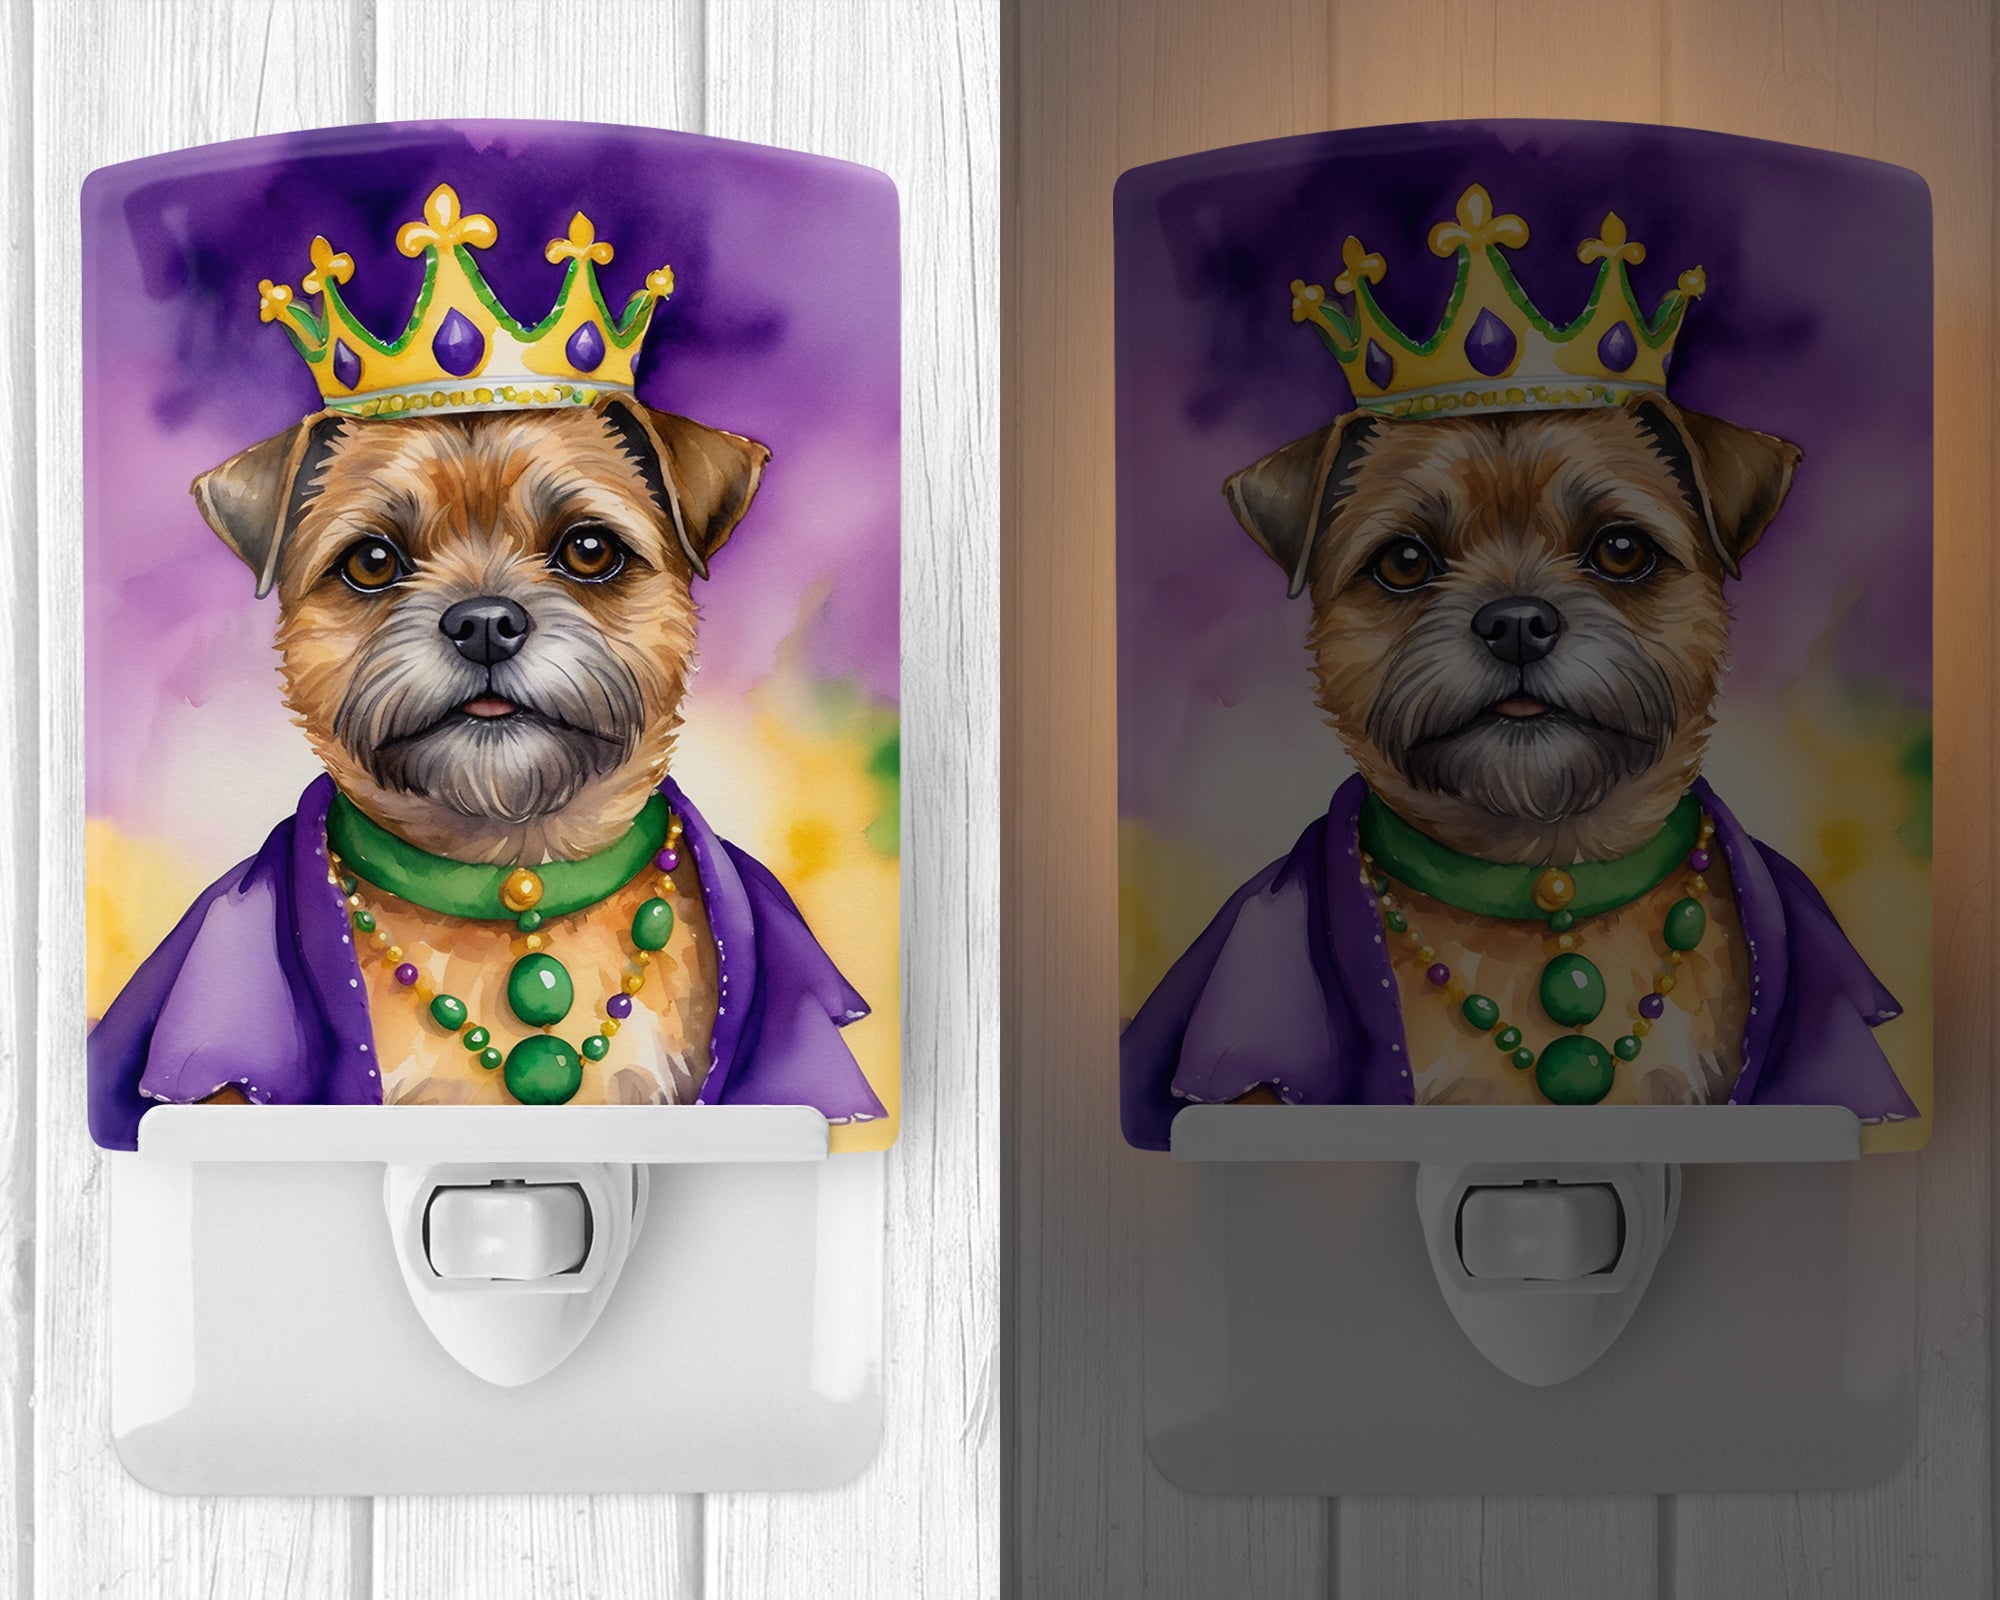 Buy this Border Terrier King of Mardi Gras Ceramic Night Light